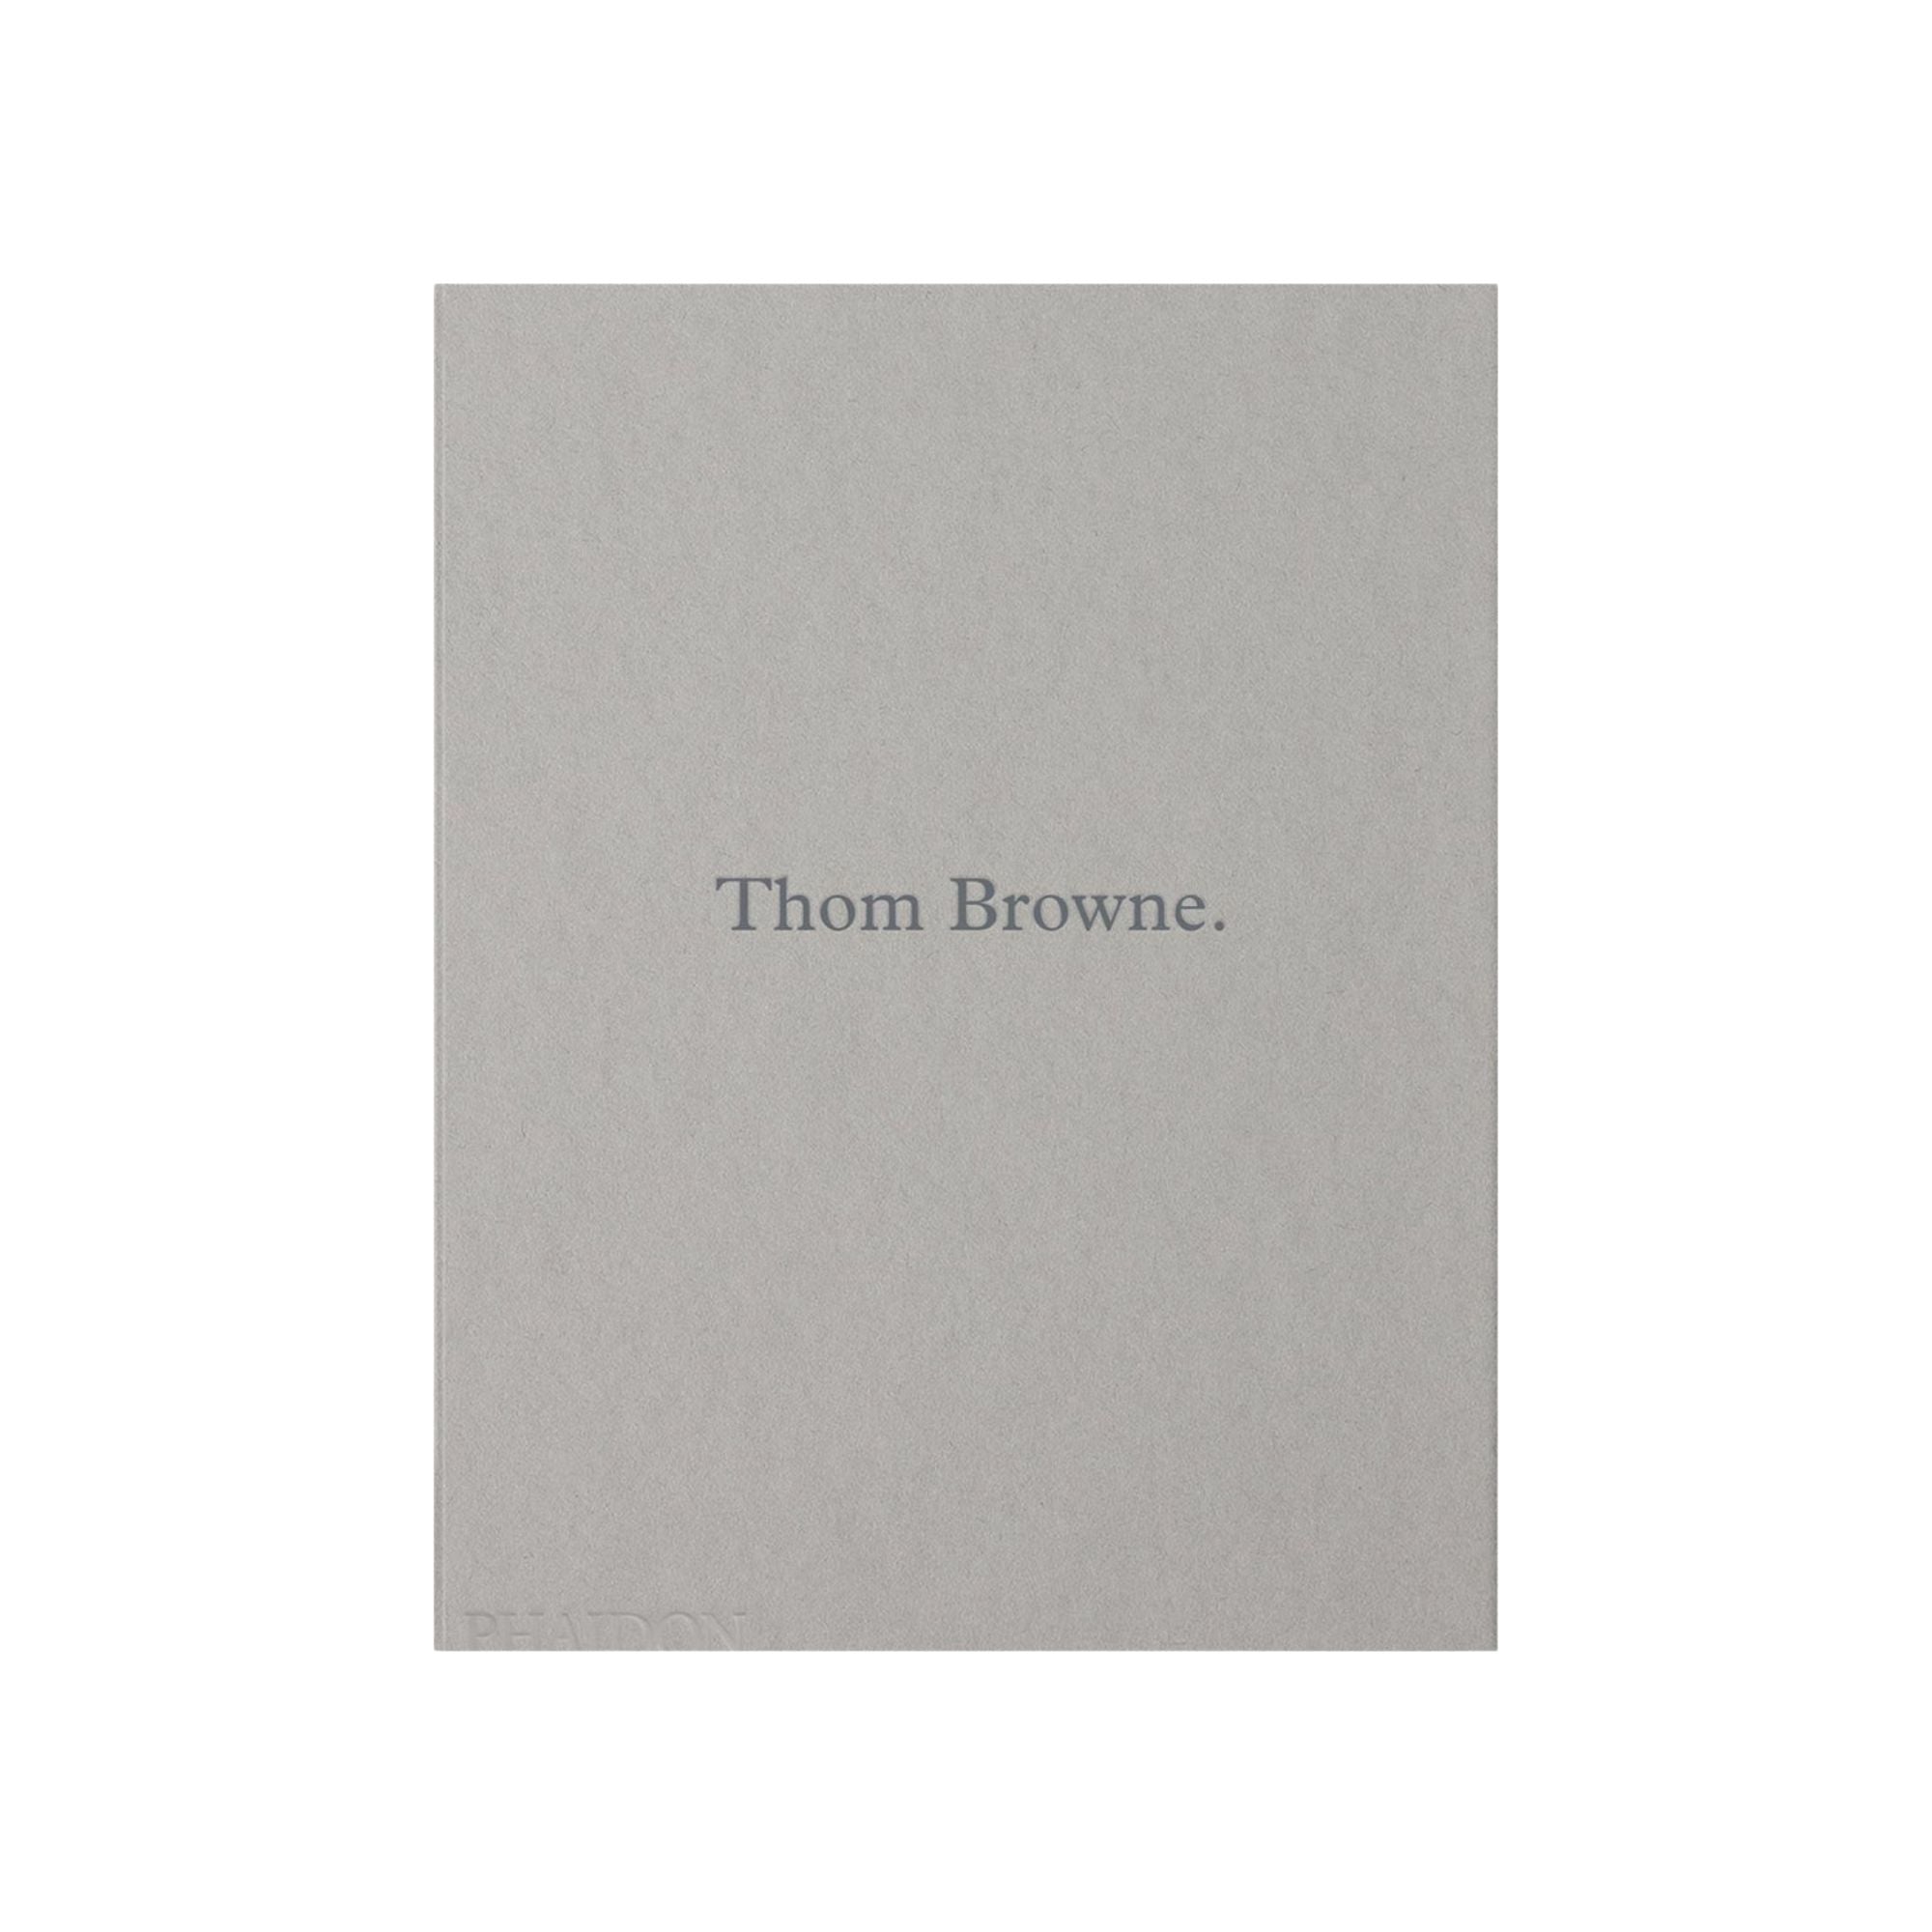 Thomas Browne